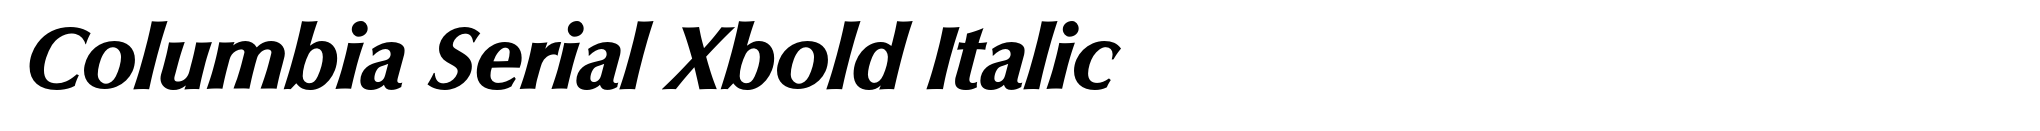 Columbia Serial Xbold Italic image